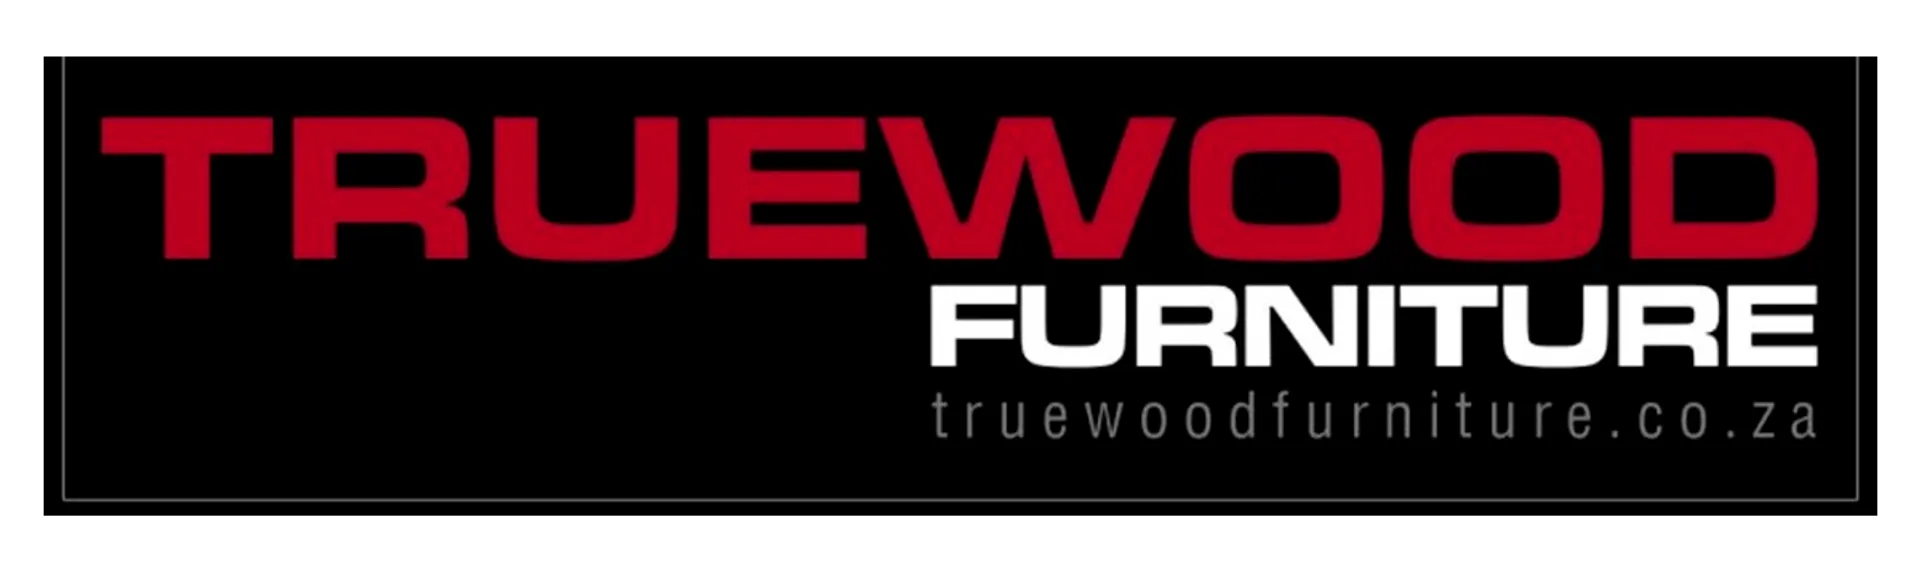 TRUE WOOD FURNITURE logo. Current weekly ad